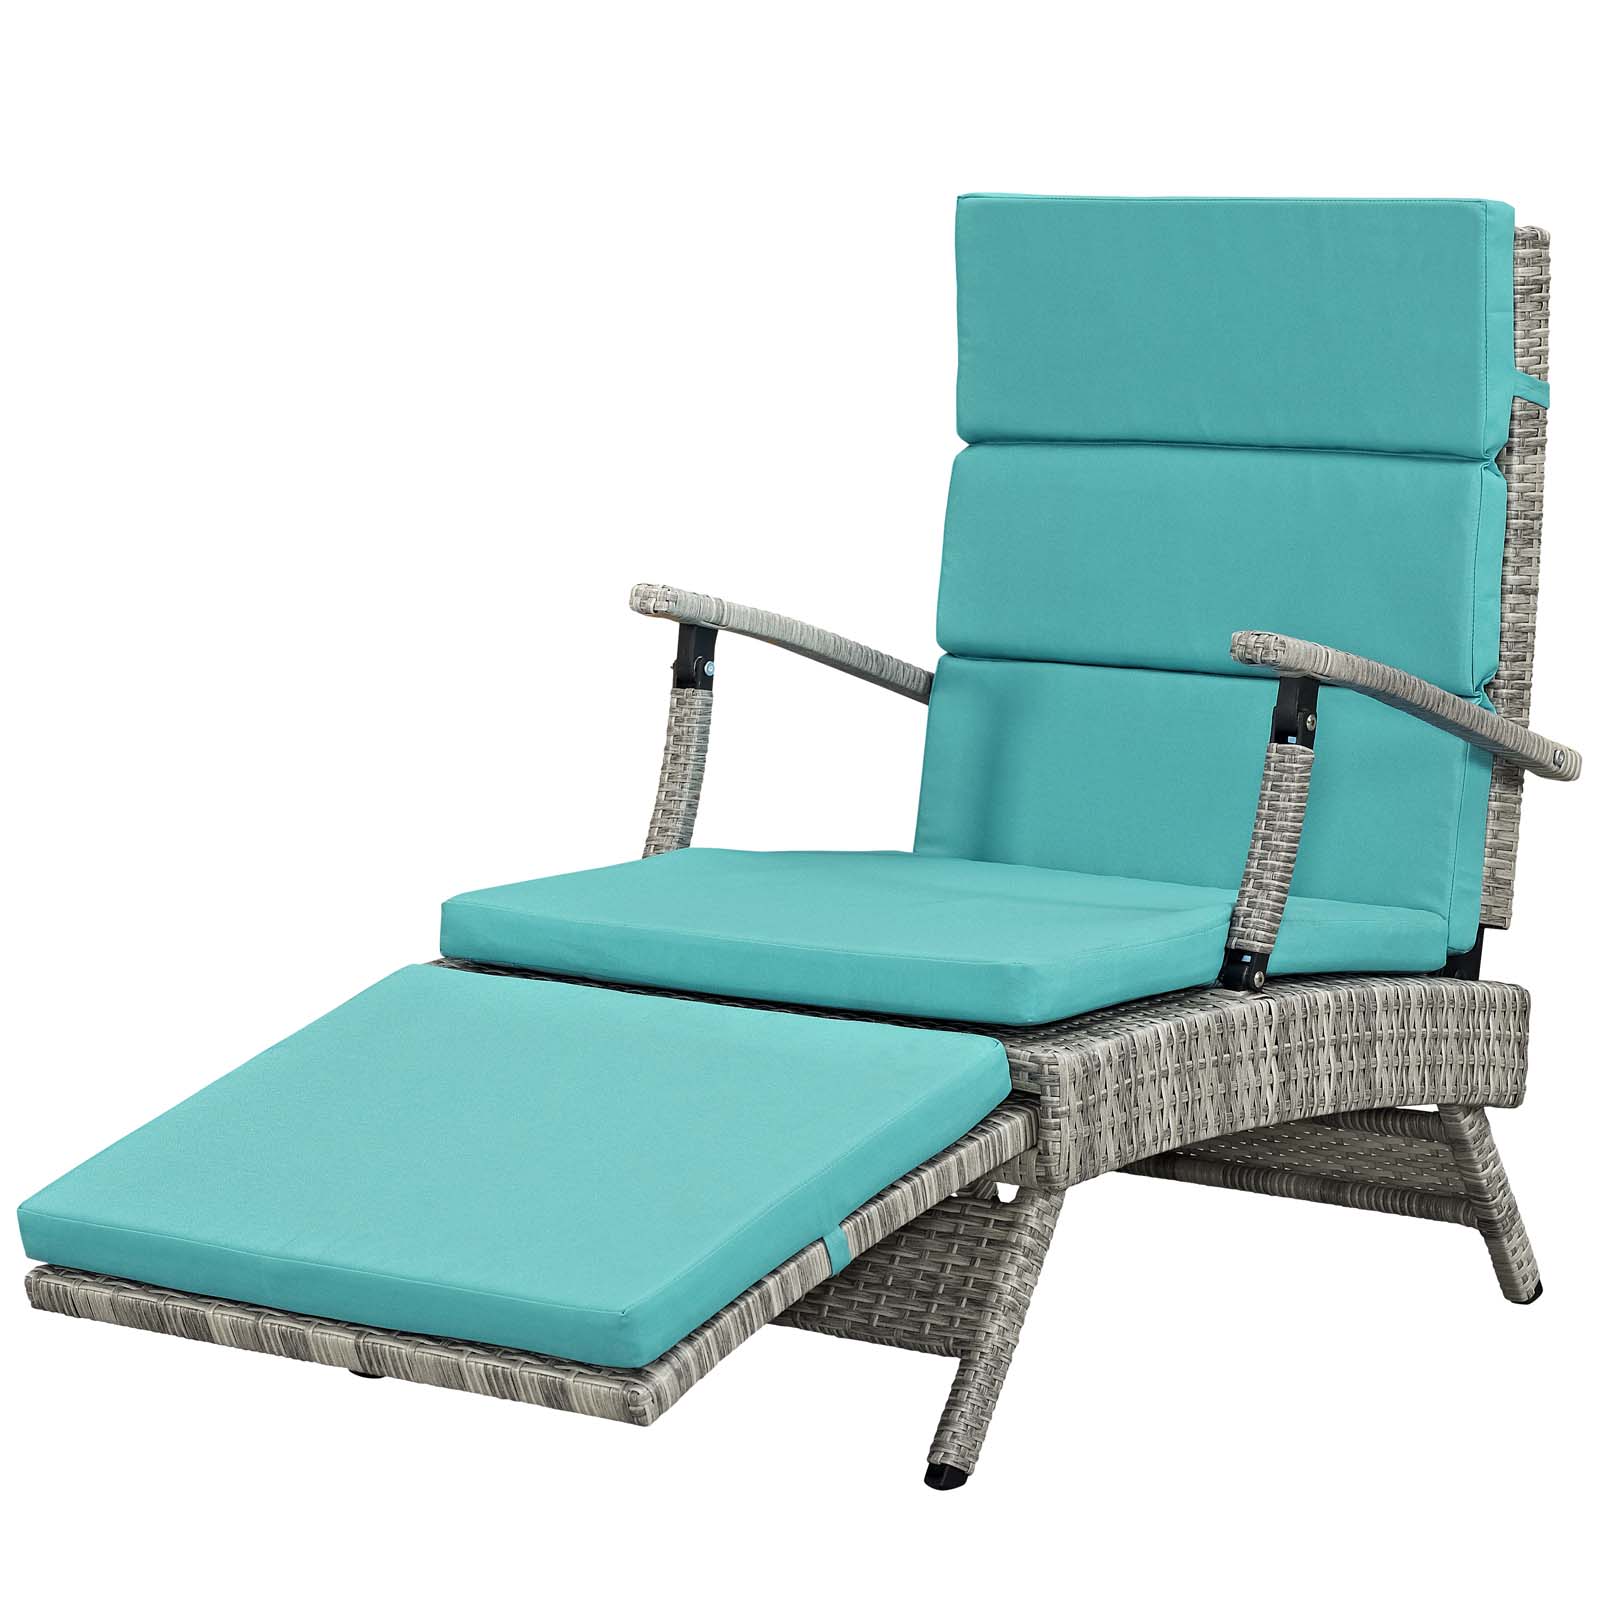 Contemporary Modern Urban Designer Outdoor Patio Balcony Garden Furniture Lounge Chair Chaise, Fabric Rattan Wicker, Blue - image 1 of 9